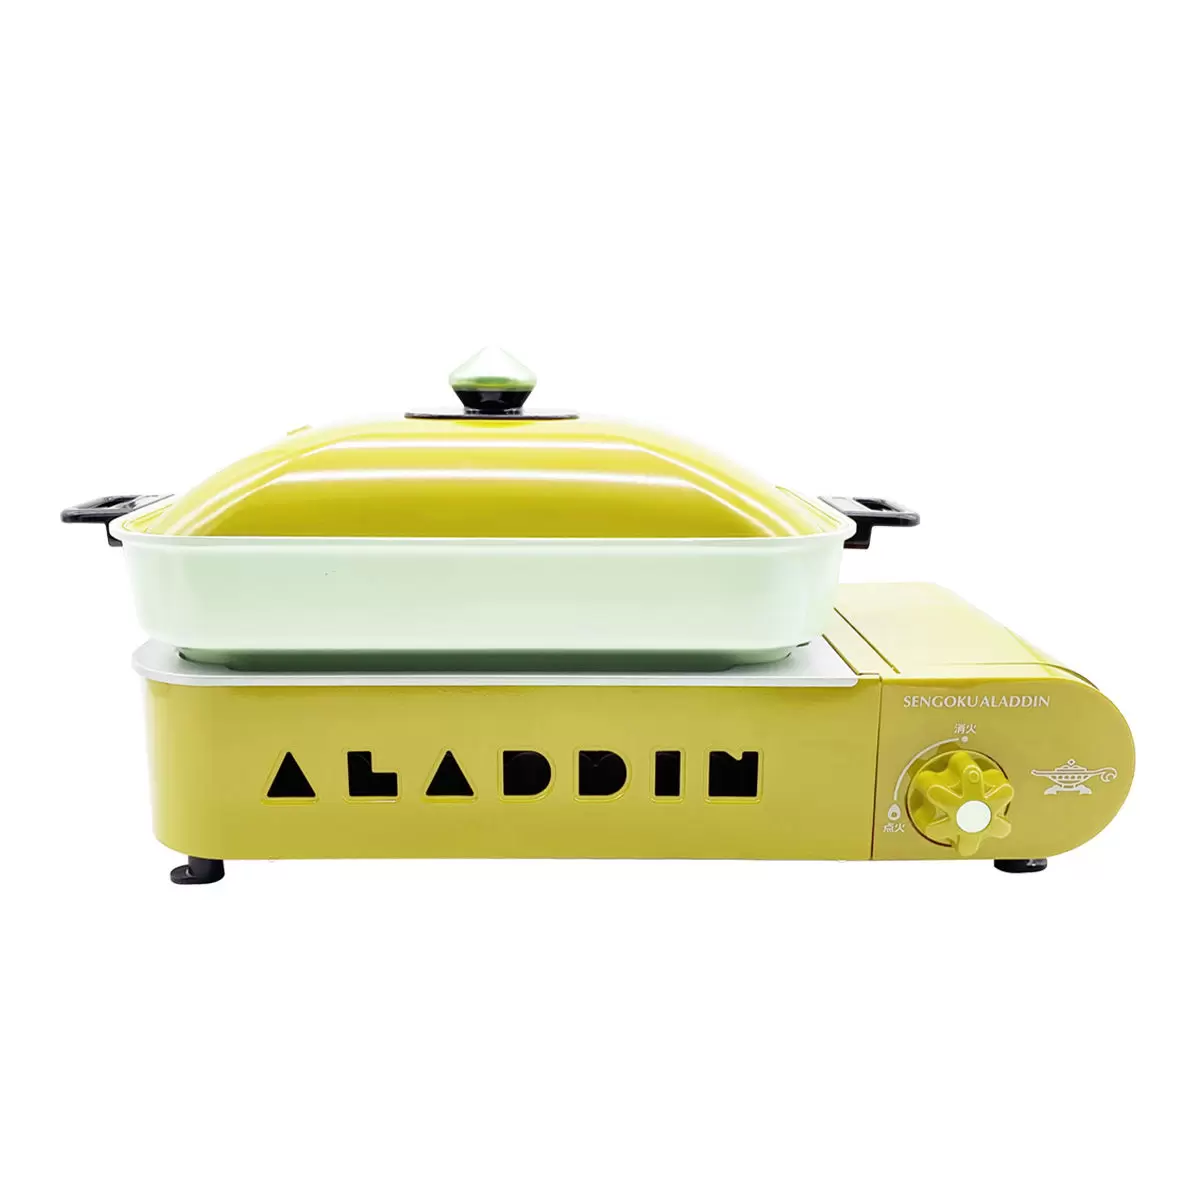 千石阿拉丁 2.1kW 煎煮烤雙盤卡式爐 SAG-RS21Y 黃色